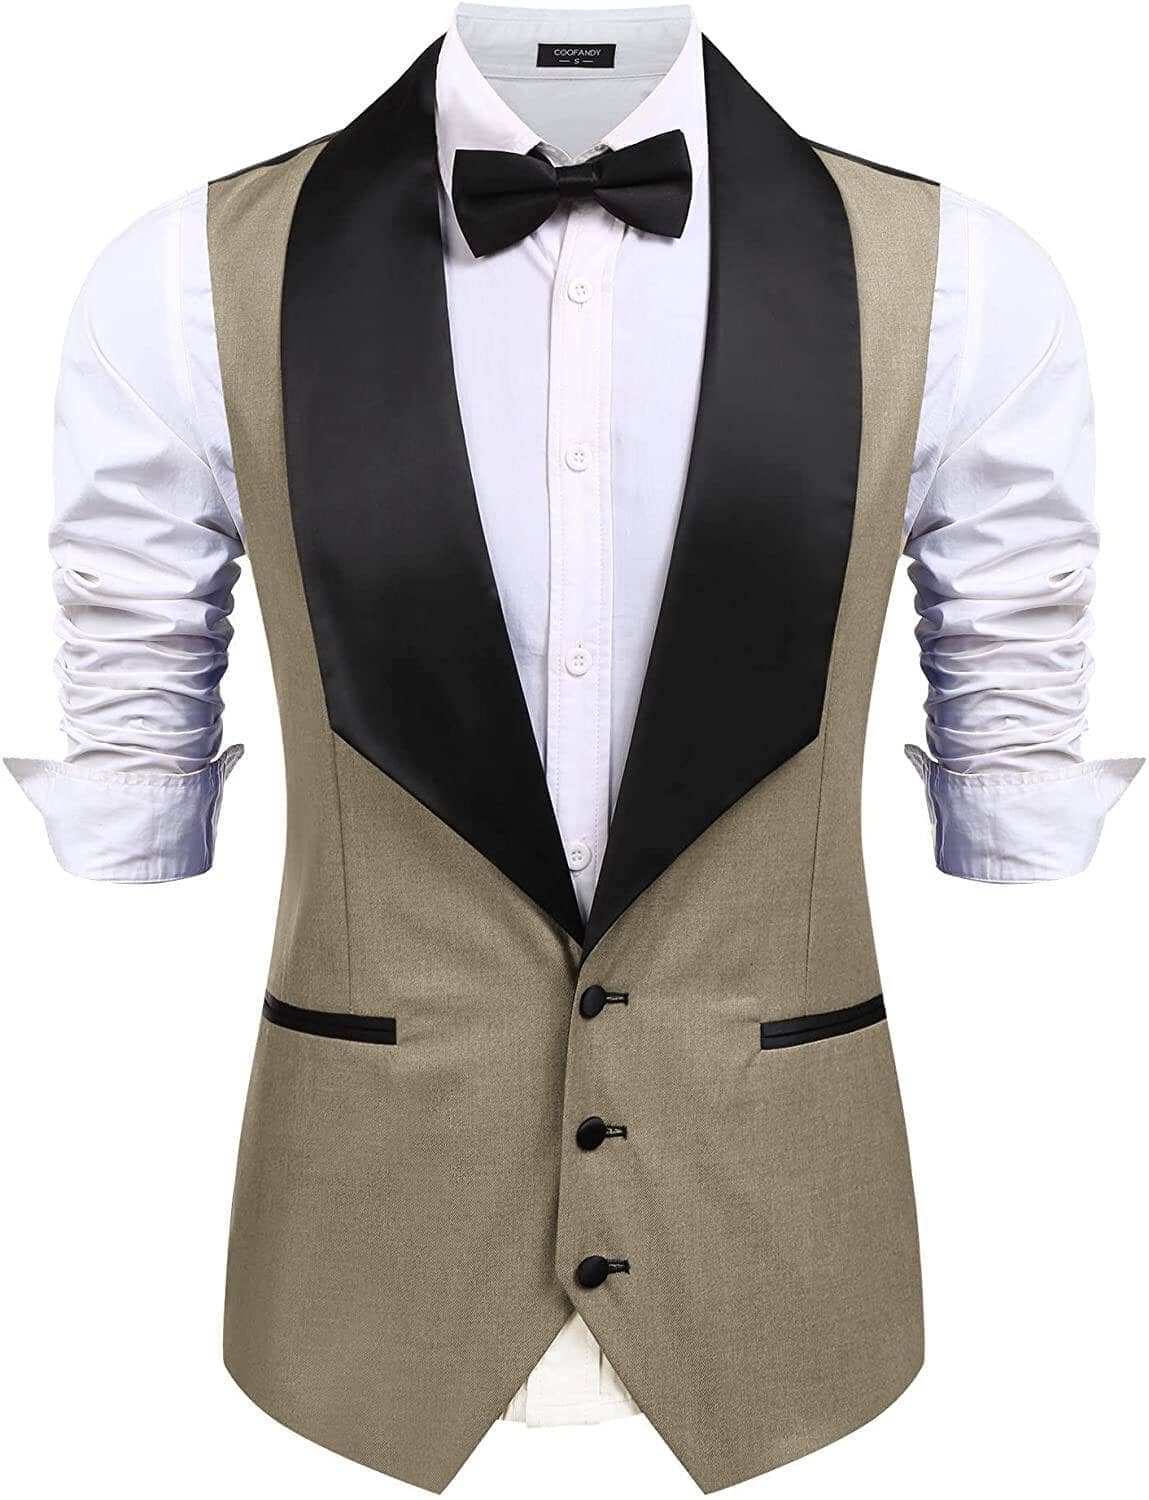 Coofandy V-Neck Slim Fit Suit Vests (US Only) Vest coofandy Khaki S 